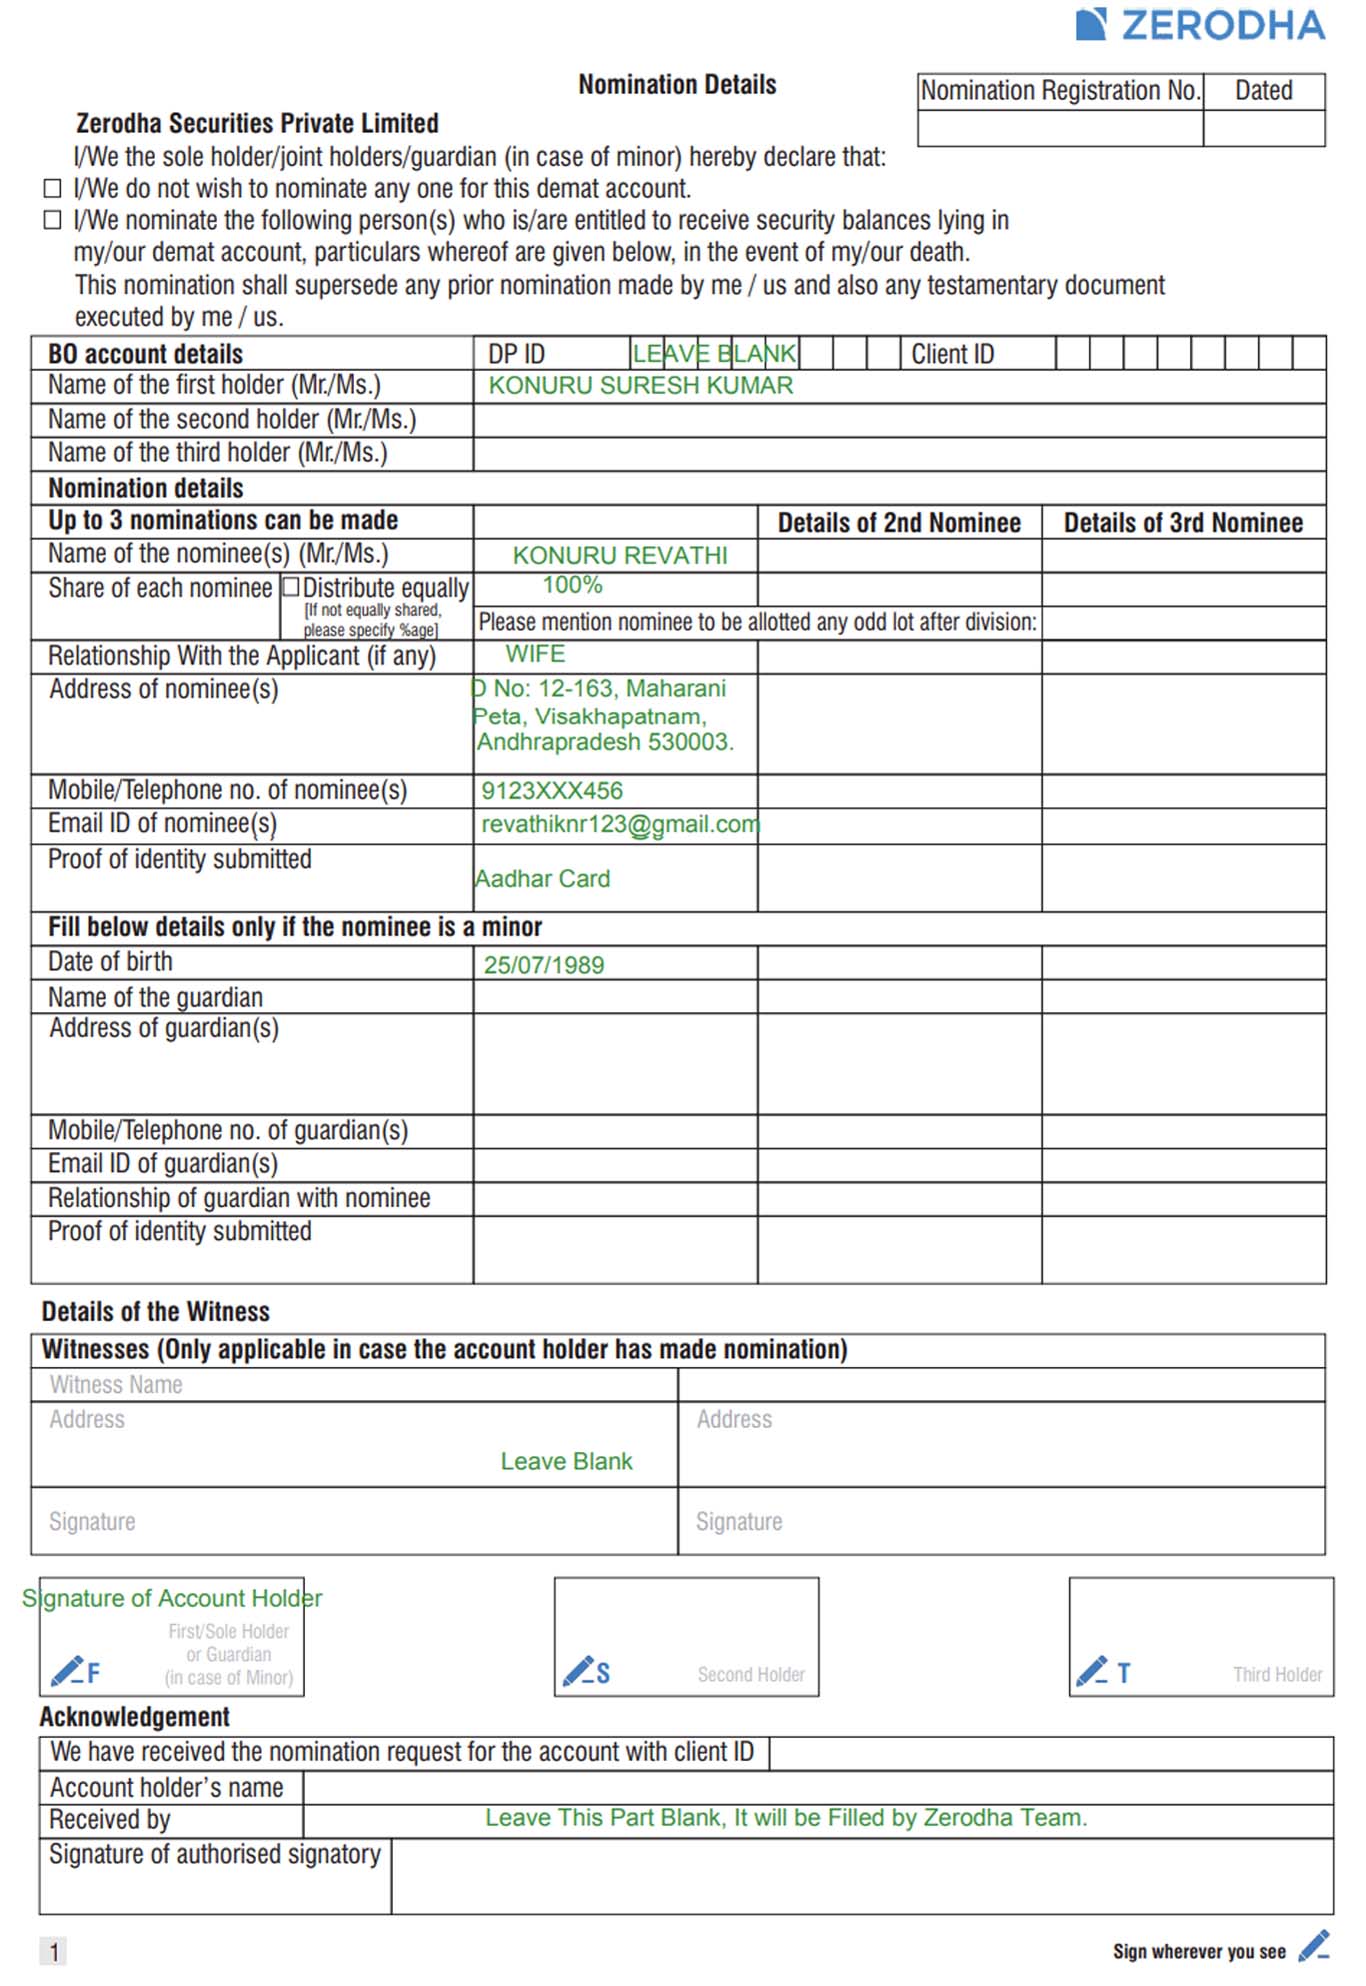 How to Fill Nomination form Zerodha (Zerodha Nomination Form Sample)